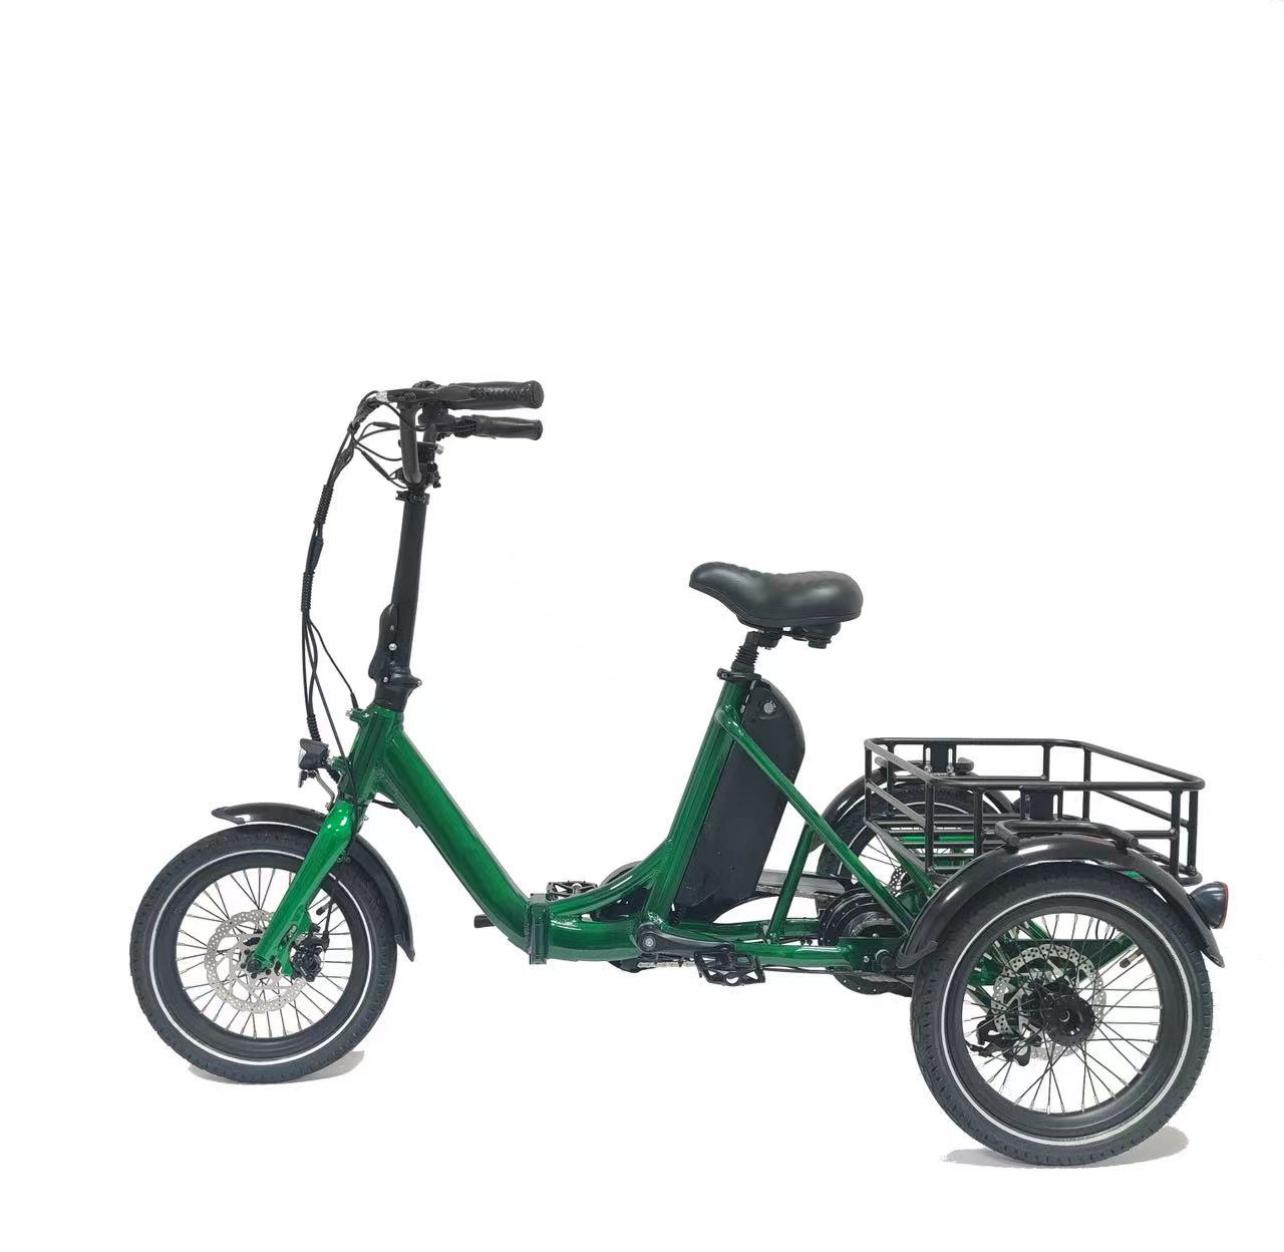 Jorvik Tricycle's new compact travel bike